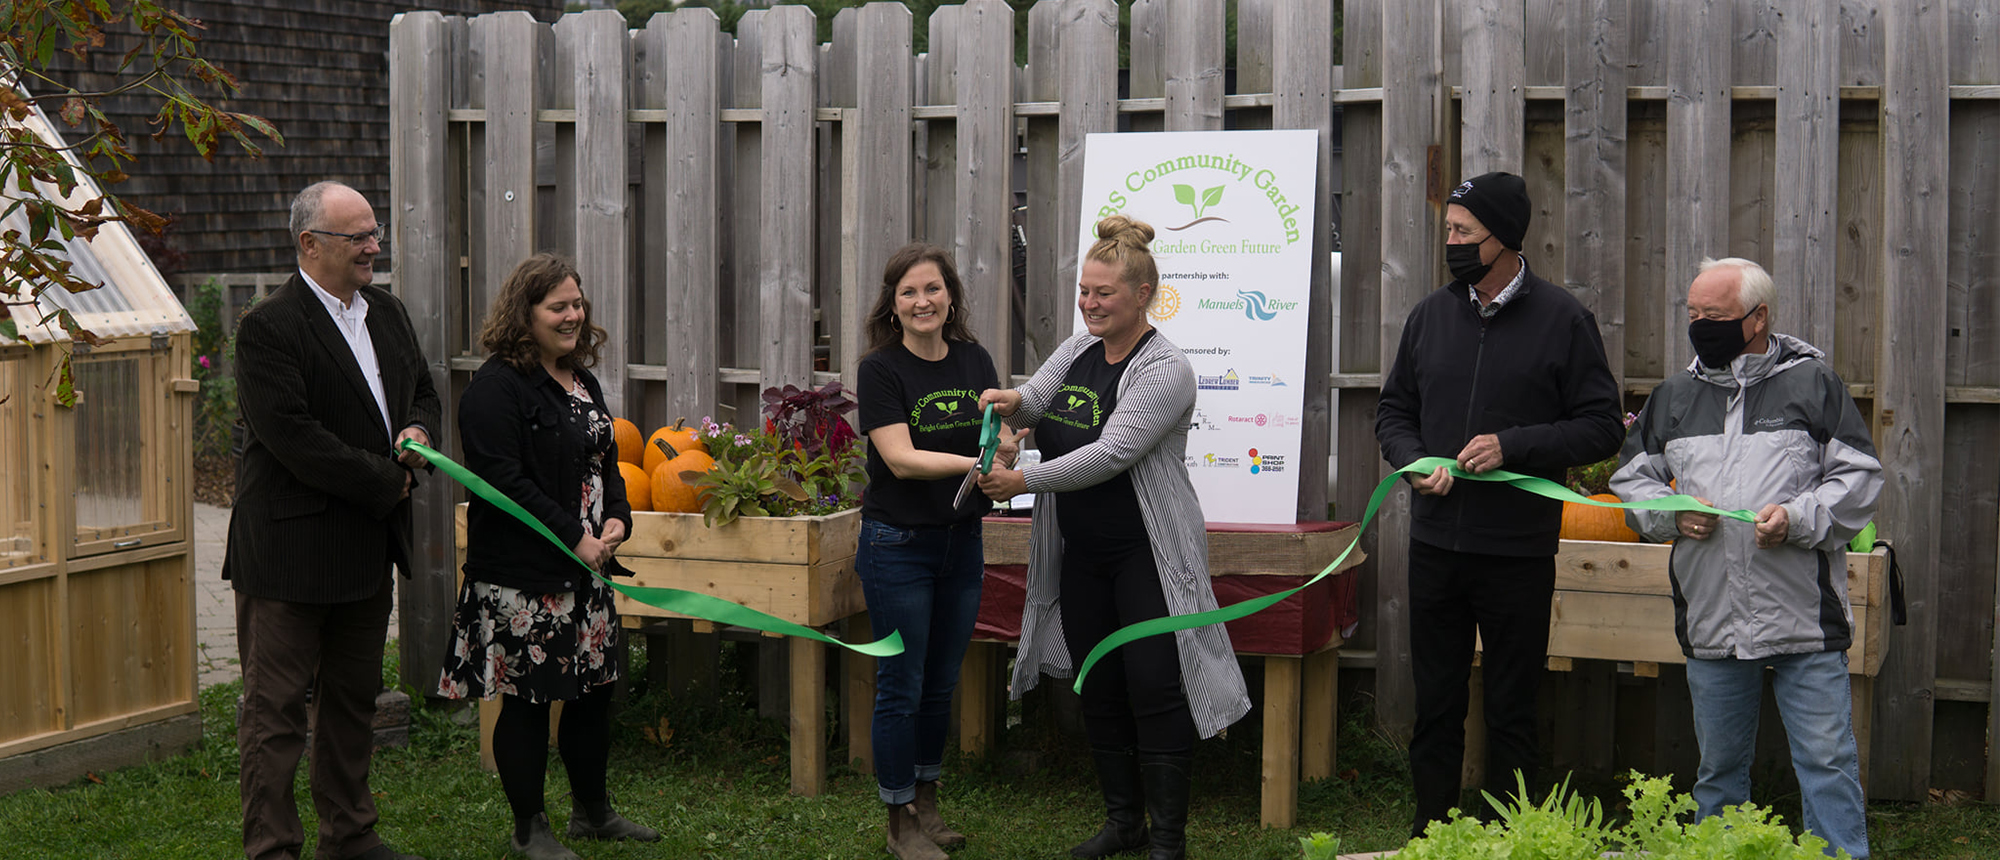 Town Celebrates Second Community Garden Location